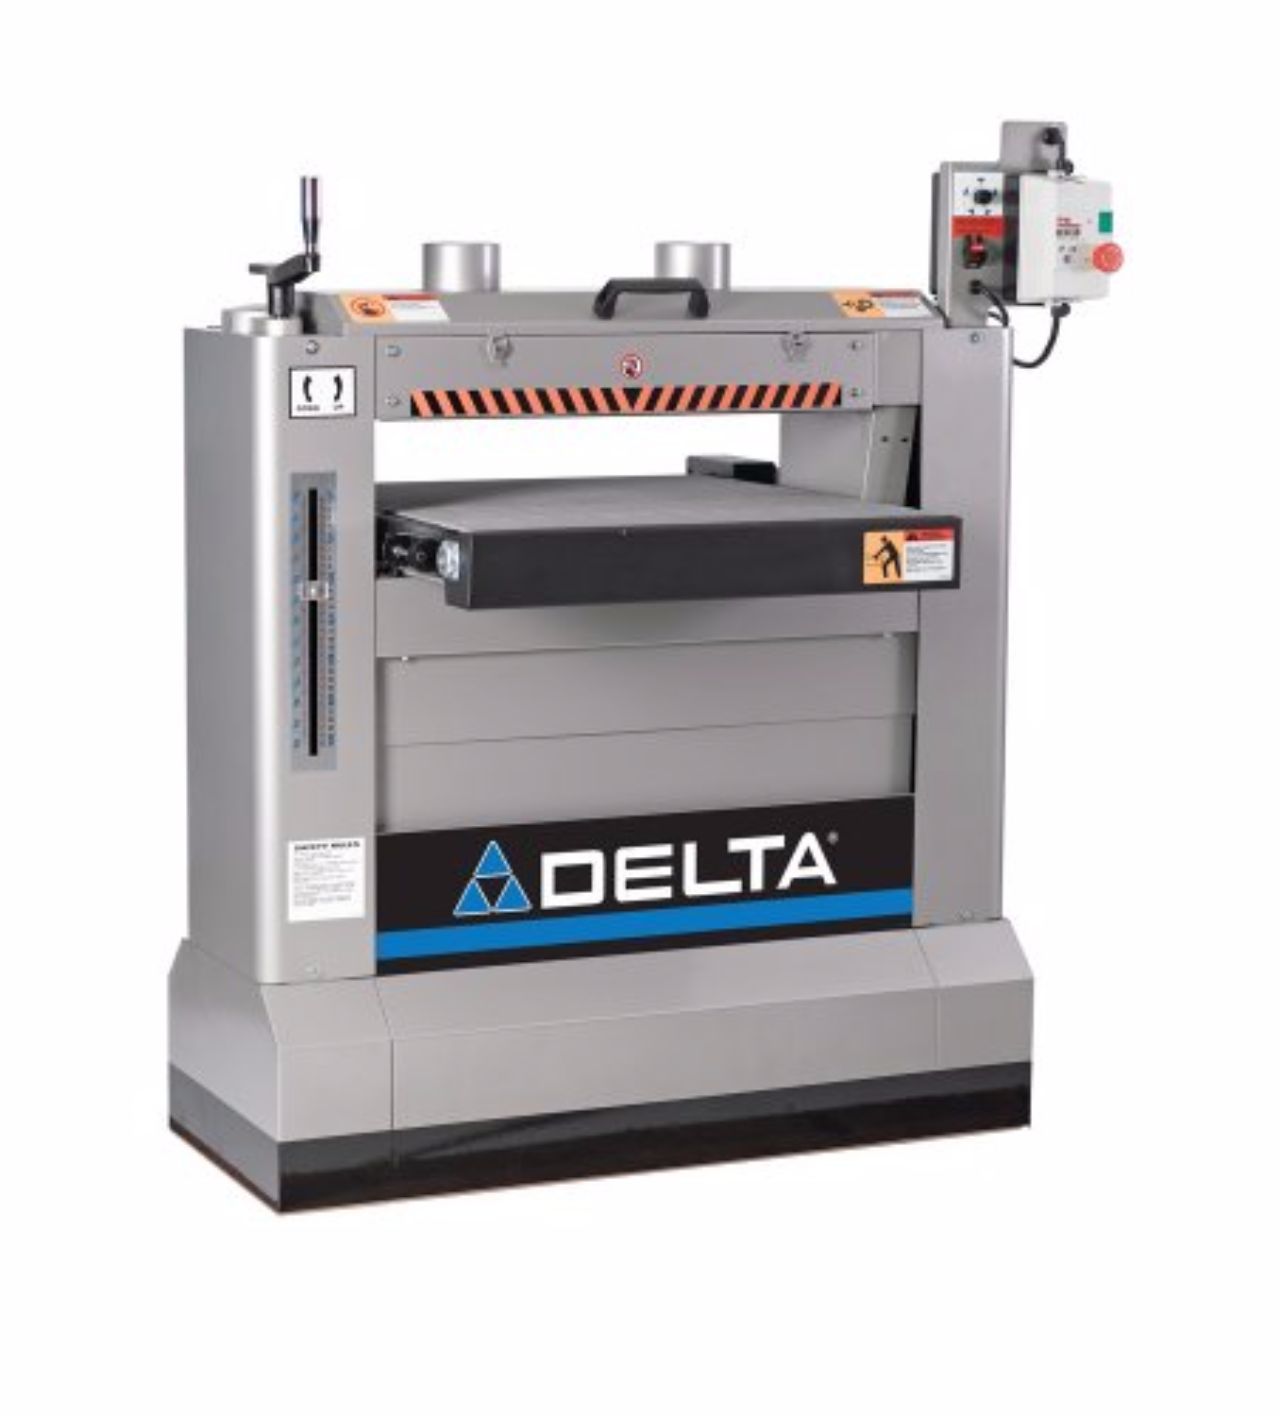 Delta Woodworking 31-481 26 Inch 3-HP Dual Drum Sander Review